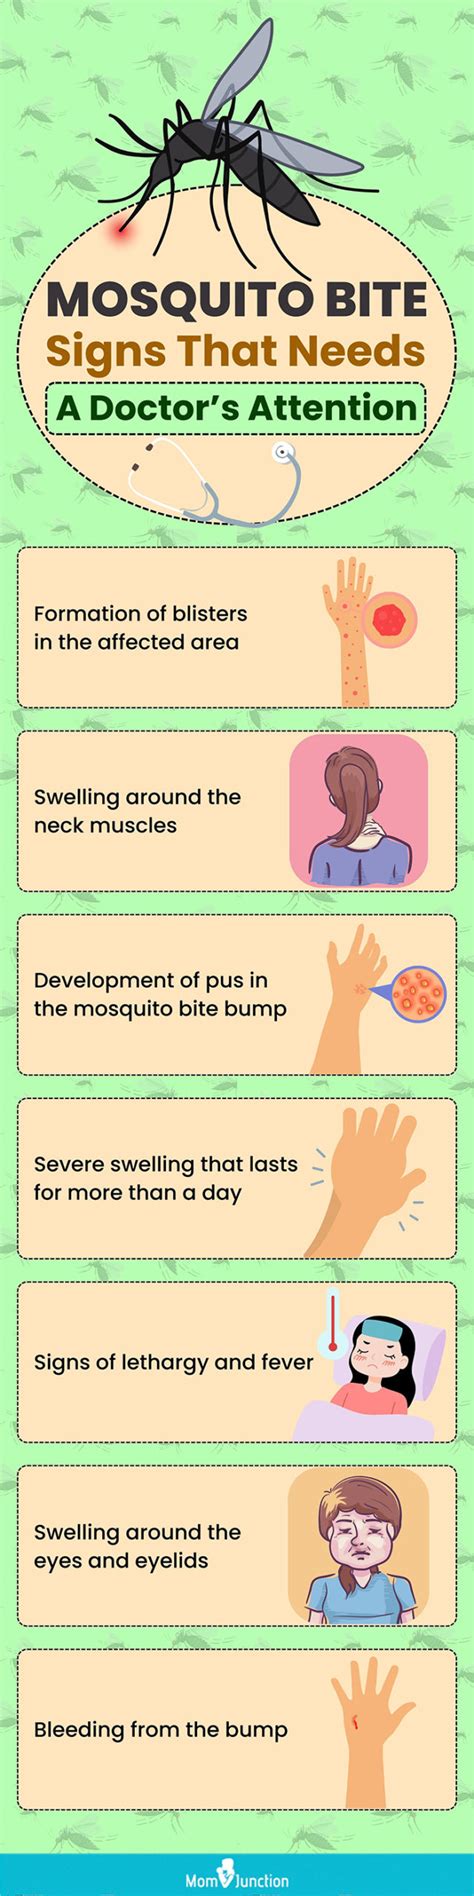 Mosquito Bites Allergy Treatment